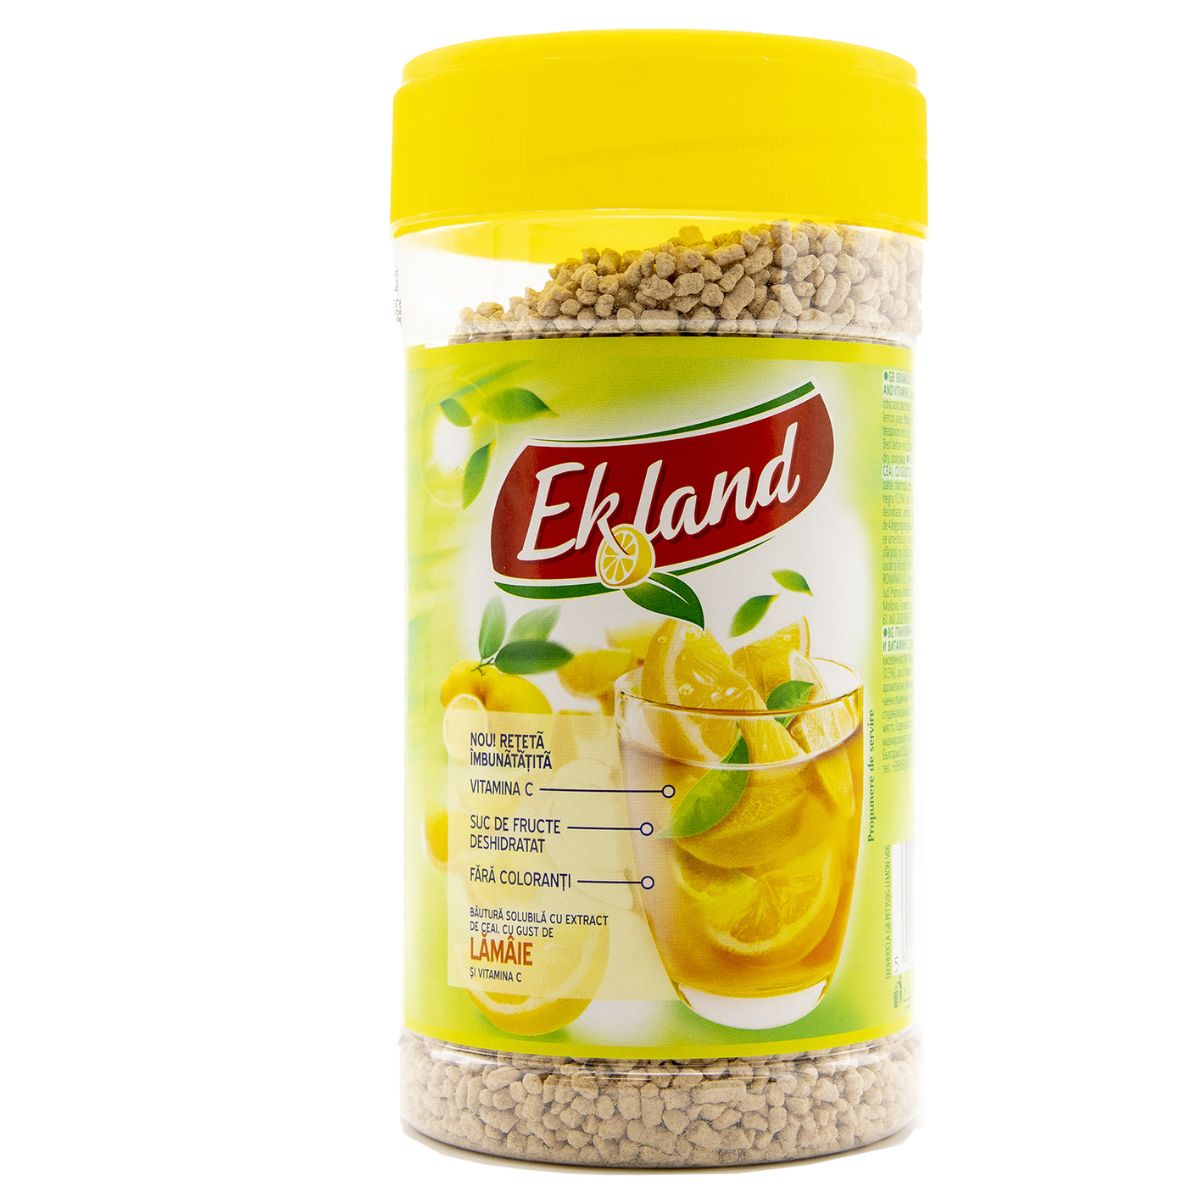 Ekoland lemon tea in a jar on a white background.